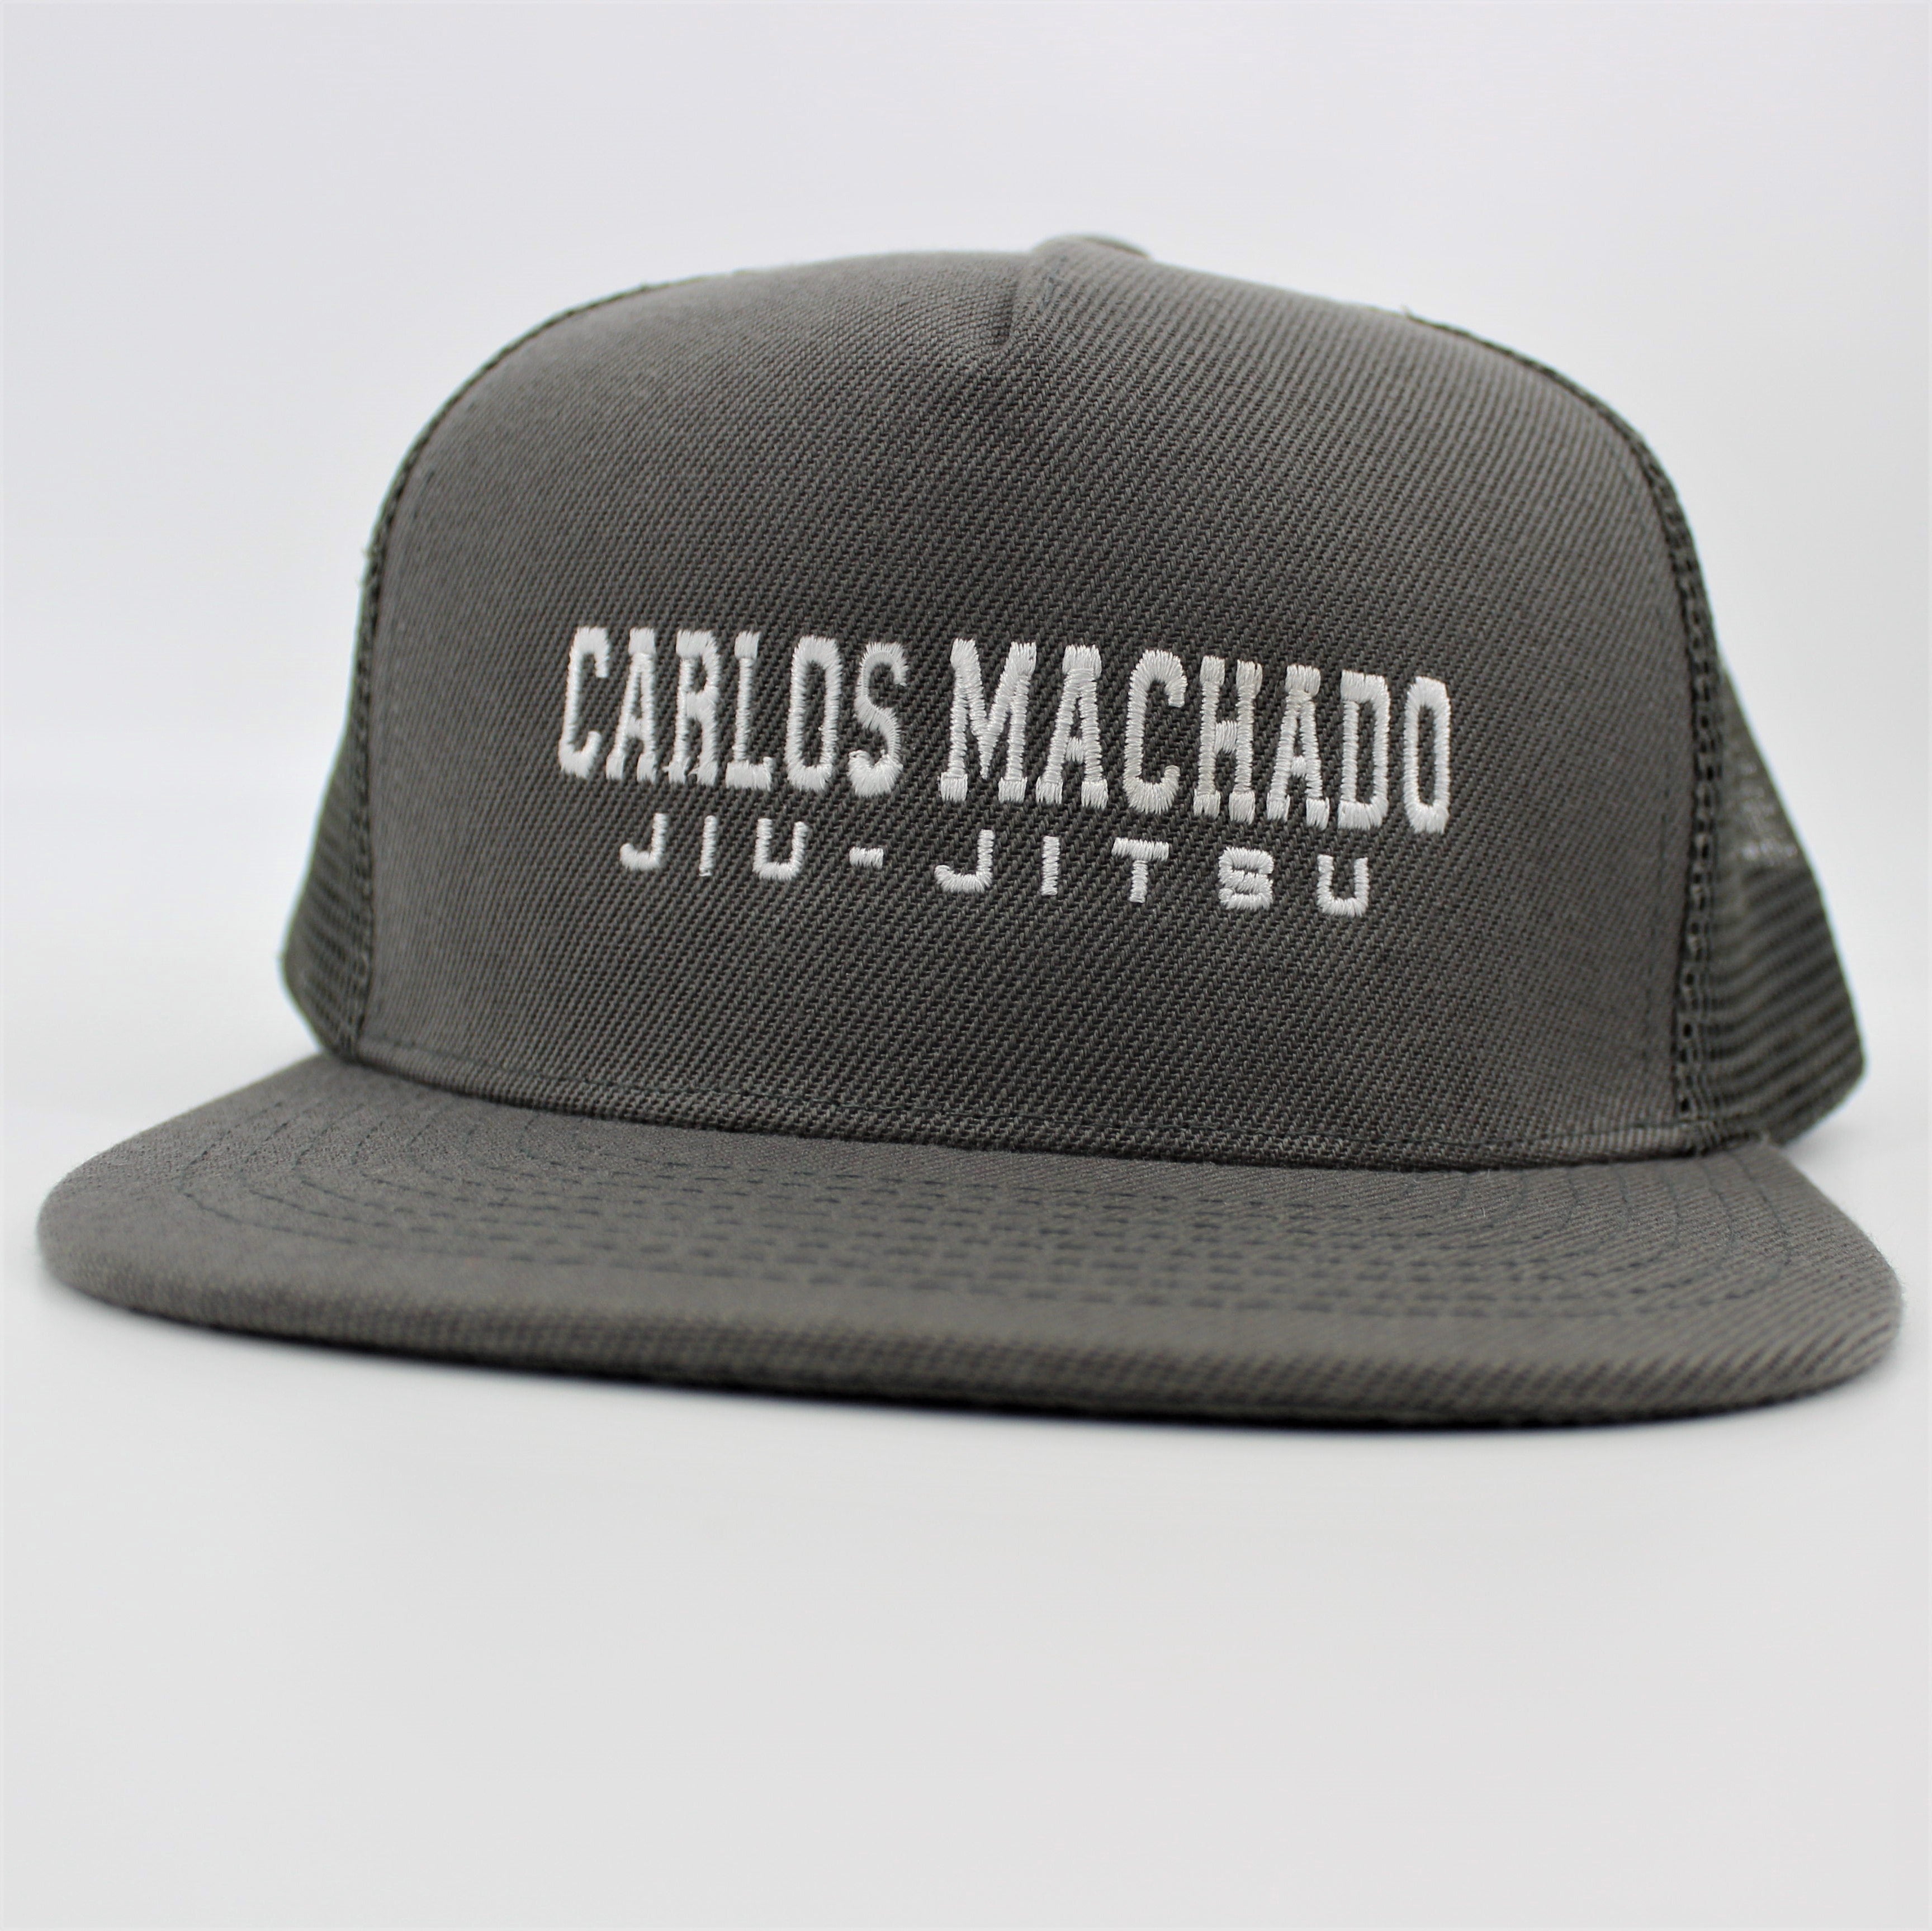 Carlos Machado Jiu-Jitsu Snapback